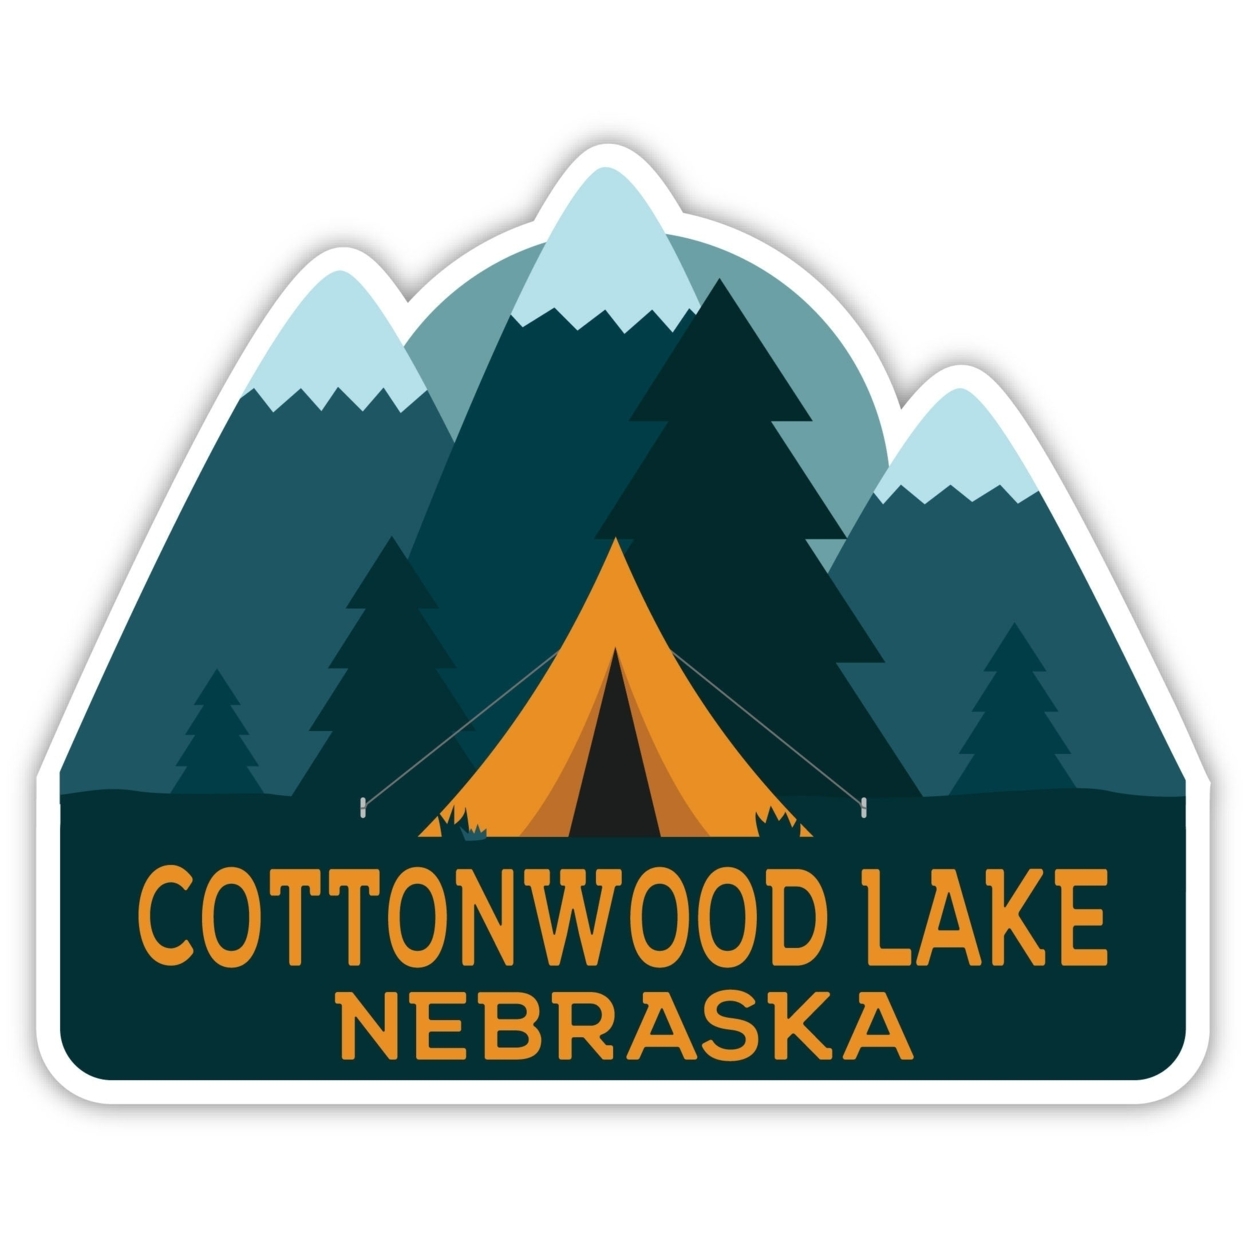 Cottonwood Lake Nebraska Souvenir Decorative Stickers (Choose Theme And Size) - 4-Pack, 12-Inch, Tent